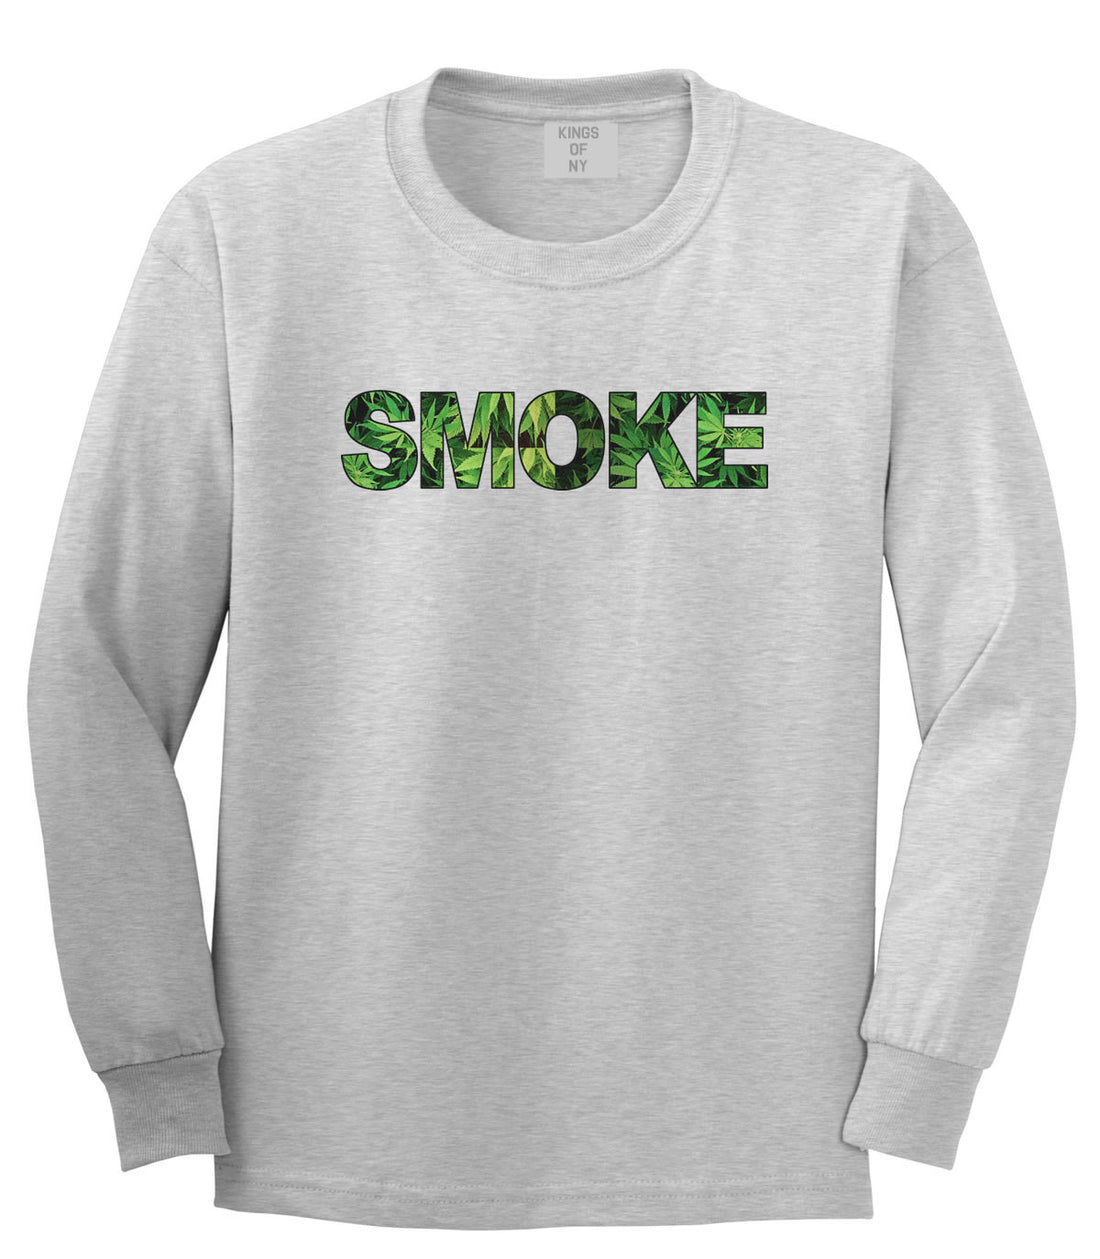 Smoke Weed Marijuana Print Boys Kids Long Sleeve T-Shirt in Grey by Kings Of NY